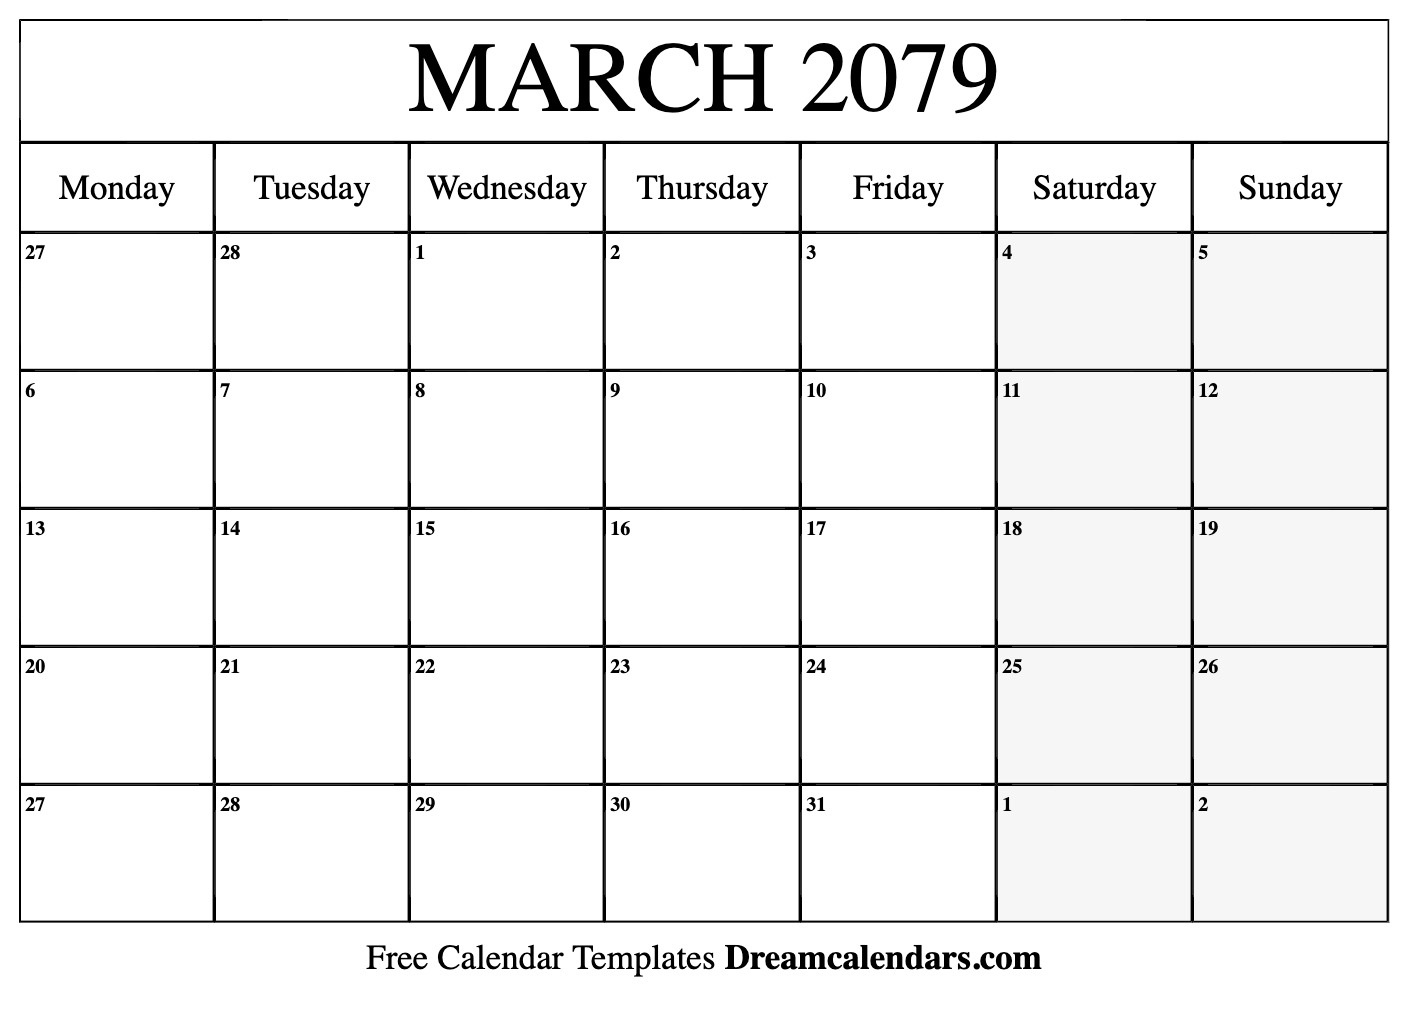 March 2079 Calendar | Free Blank Printable Templates